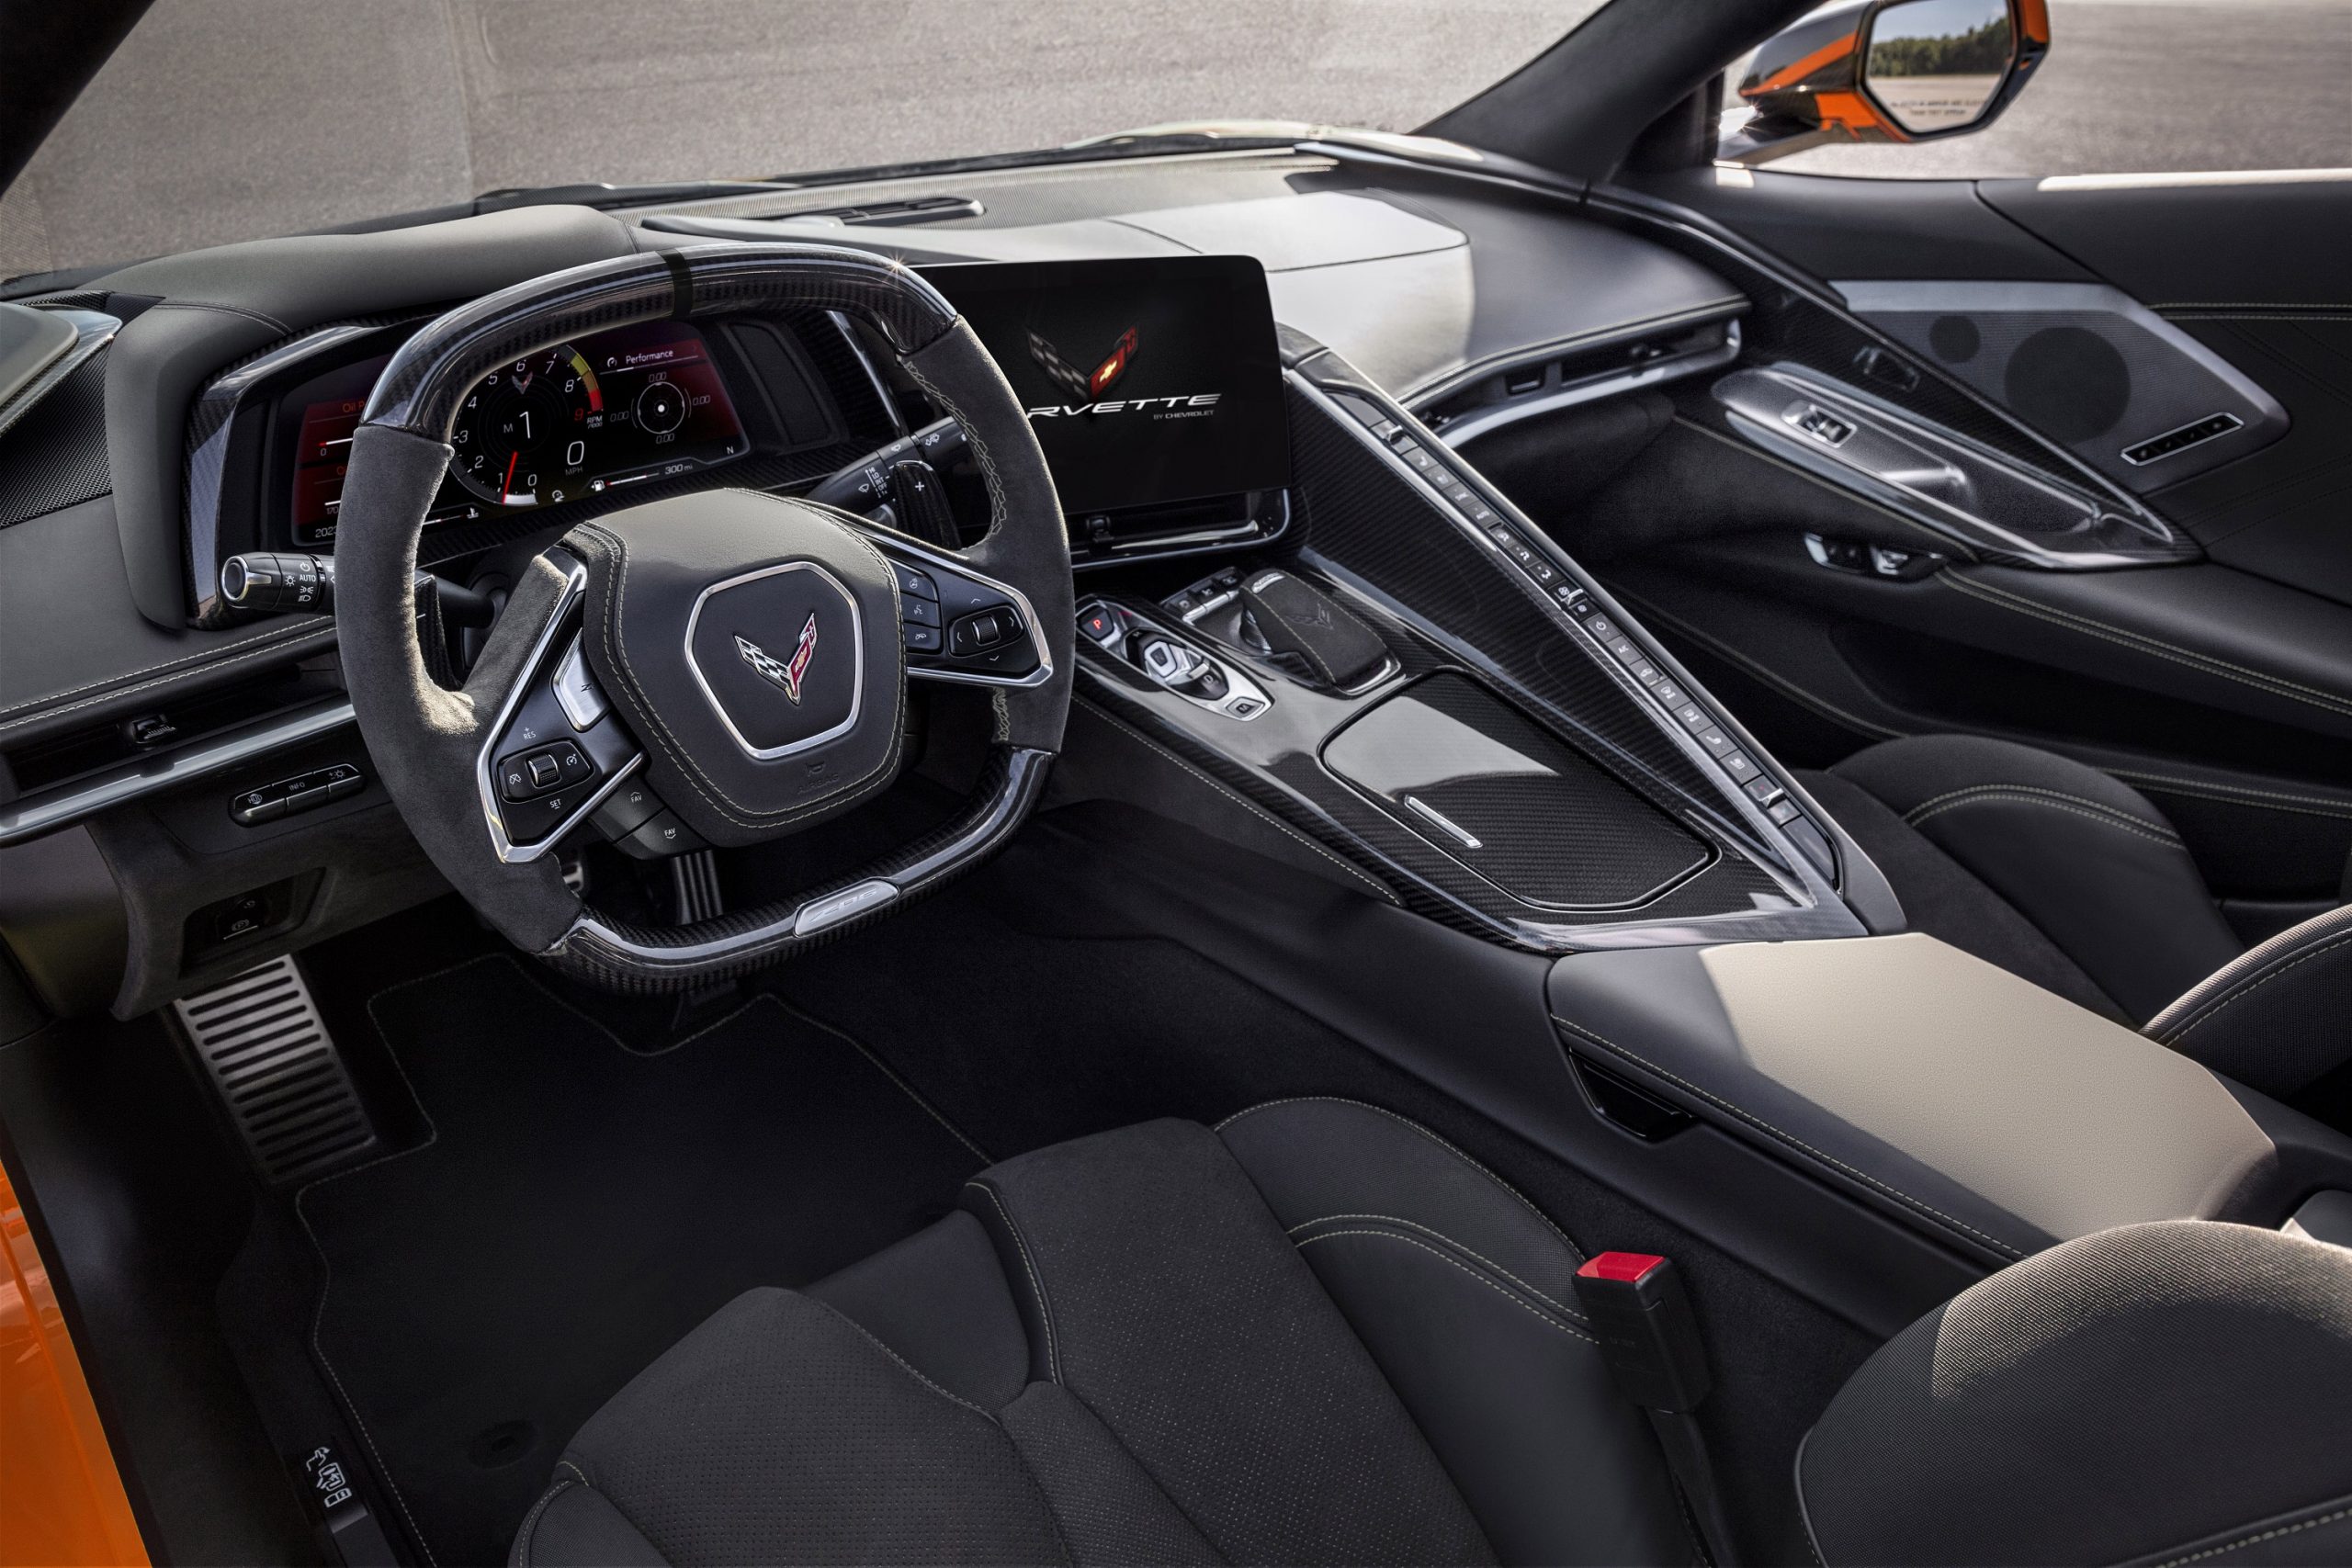 The interior of the new Corvette Z06 in black